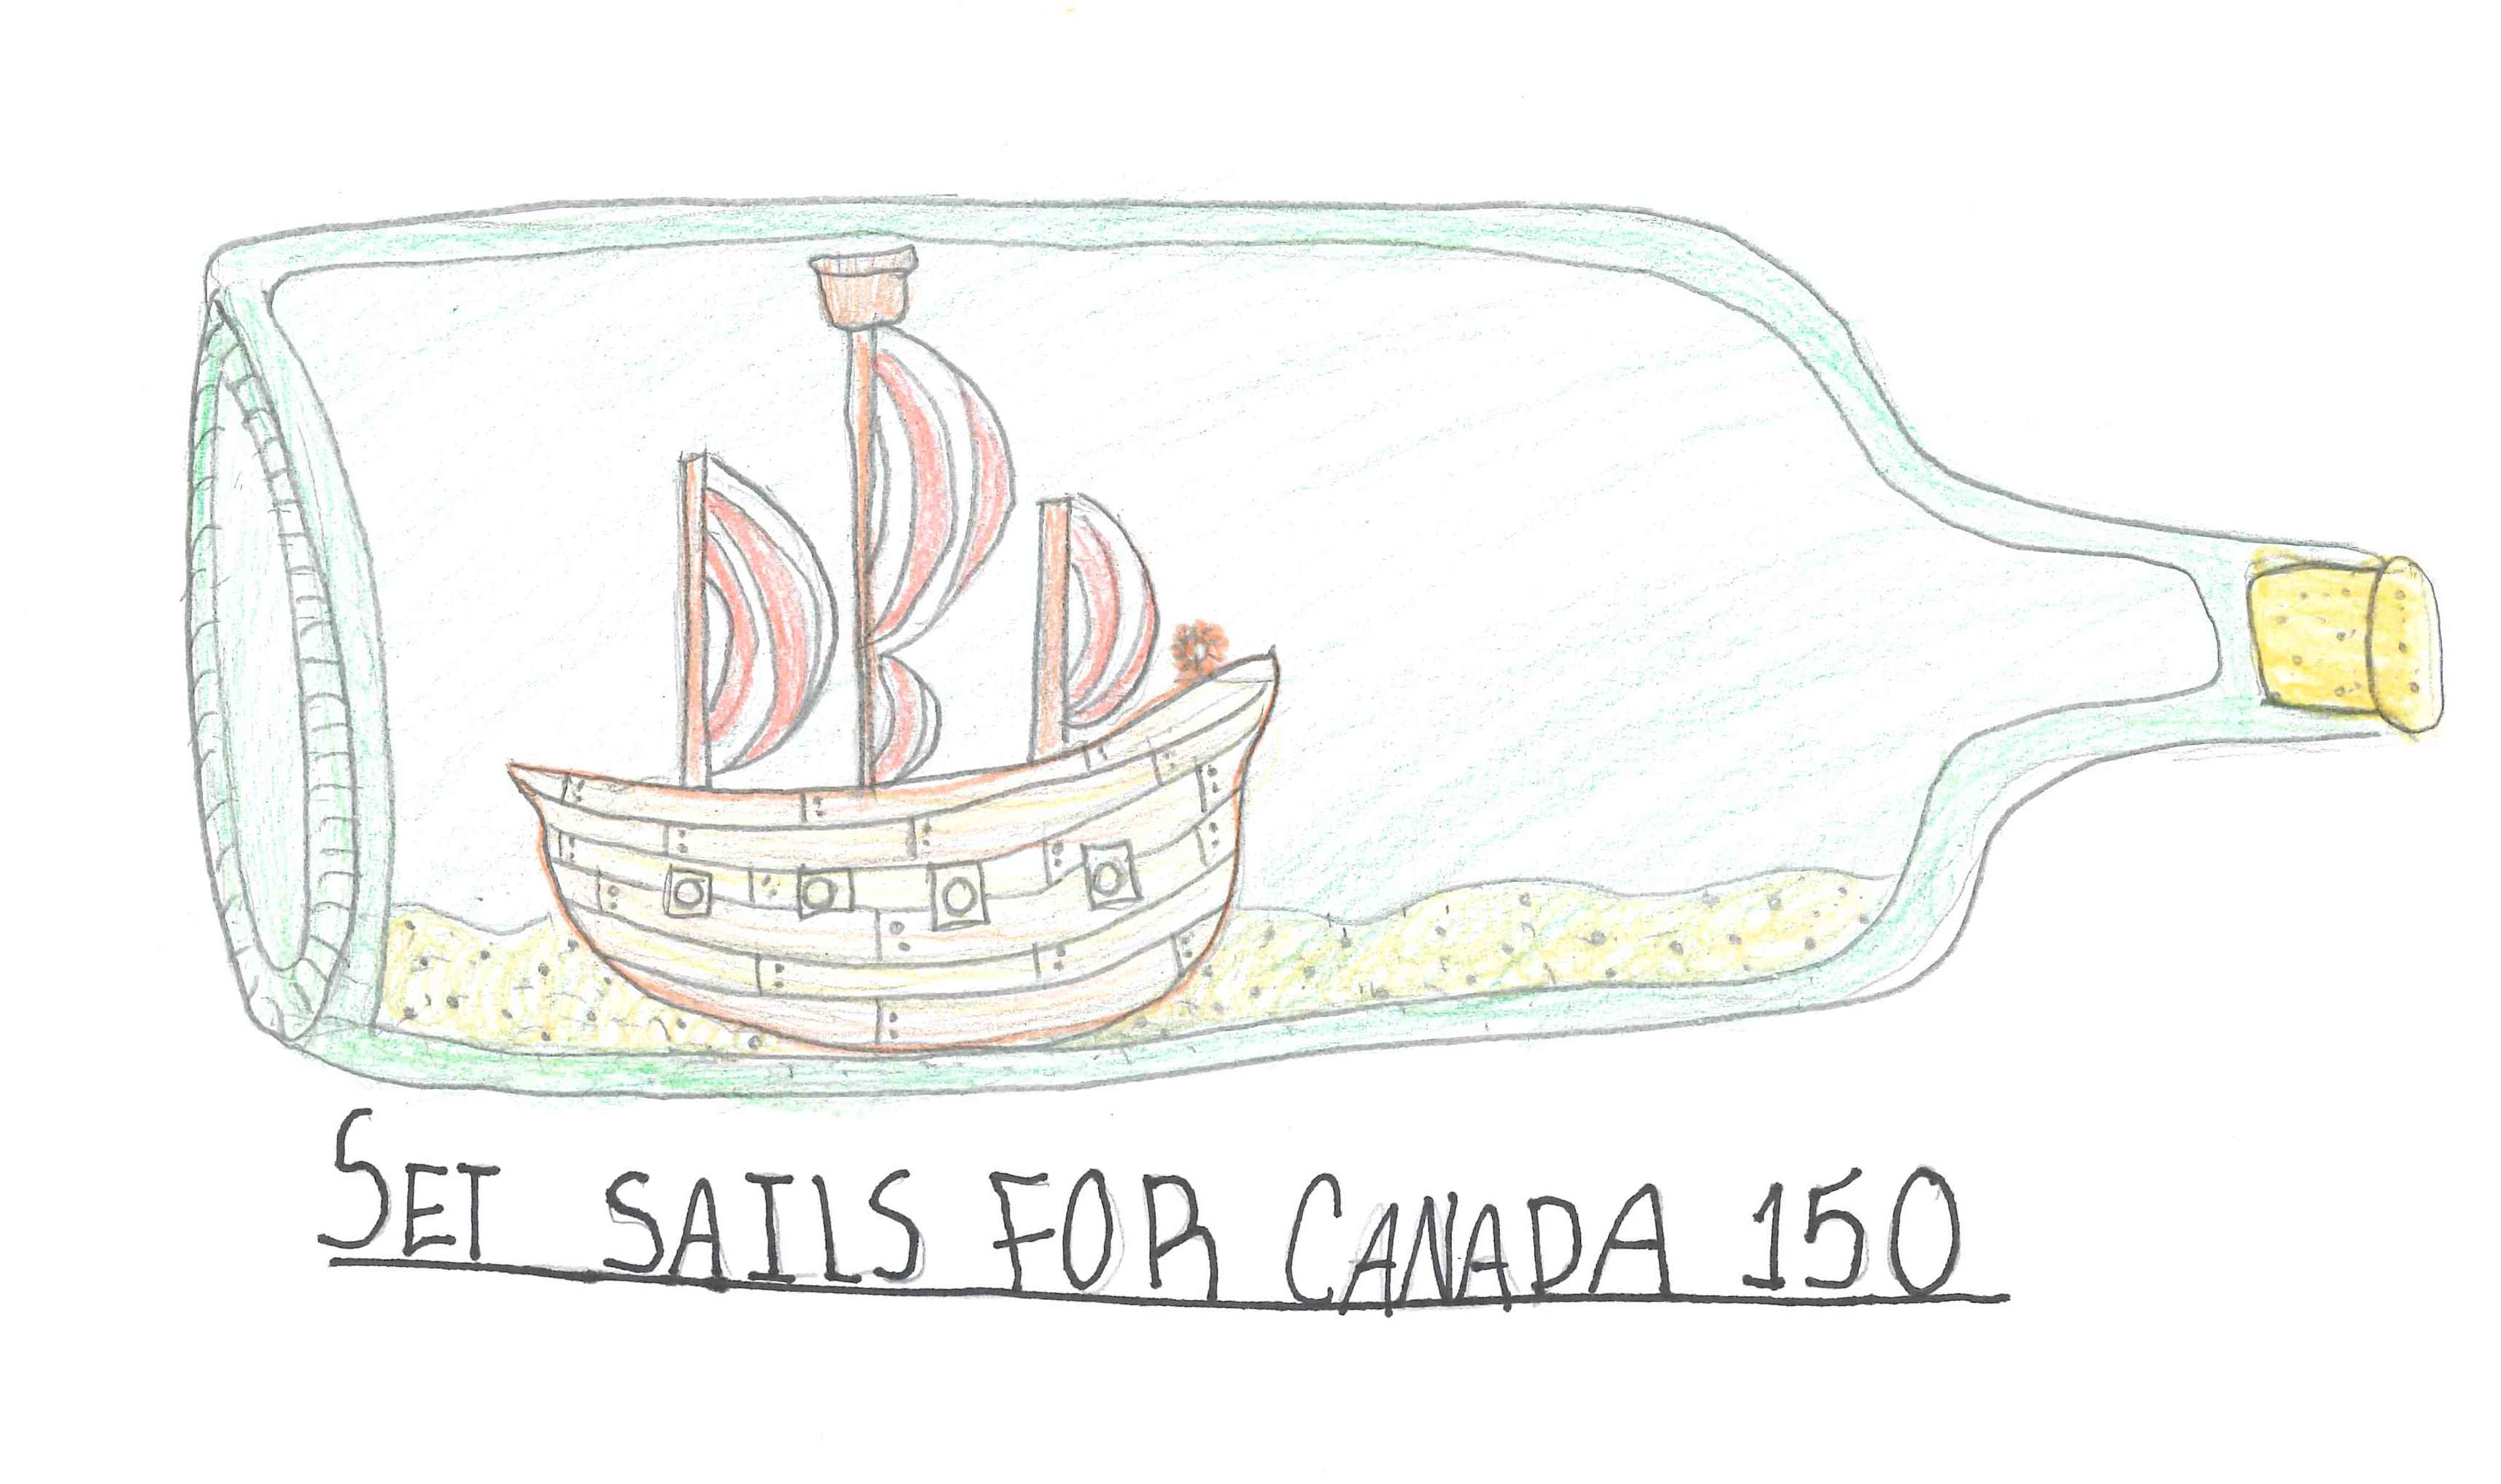 Second Prize: Mya C. Grade 6. "Set sails"